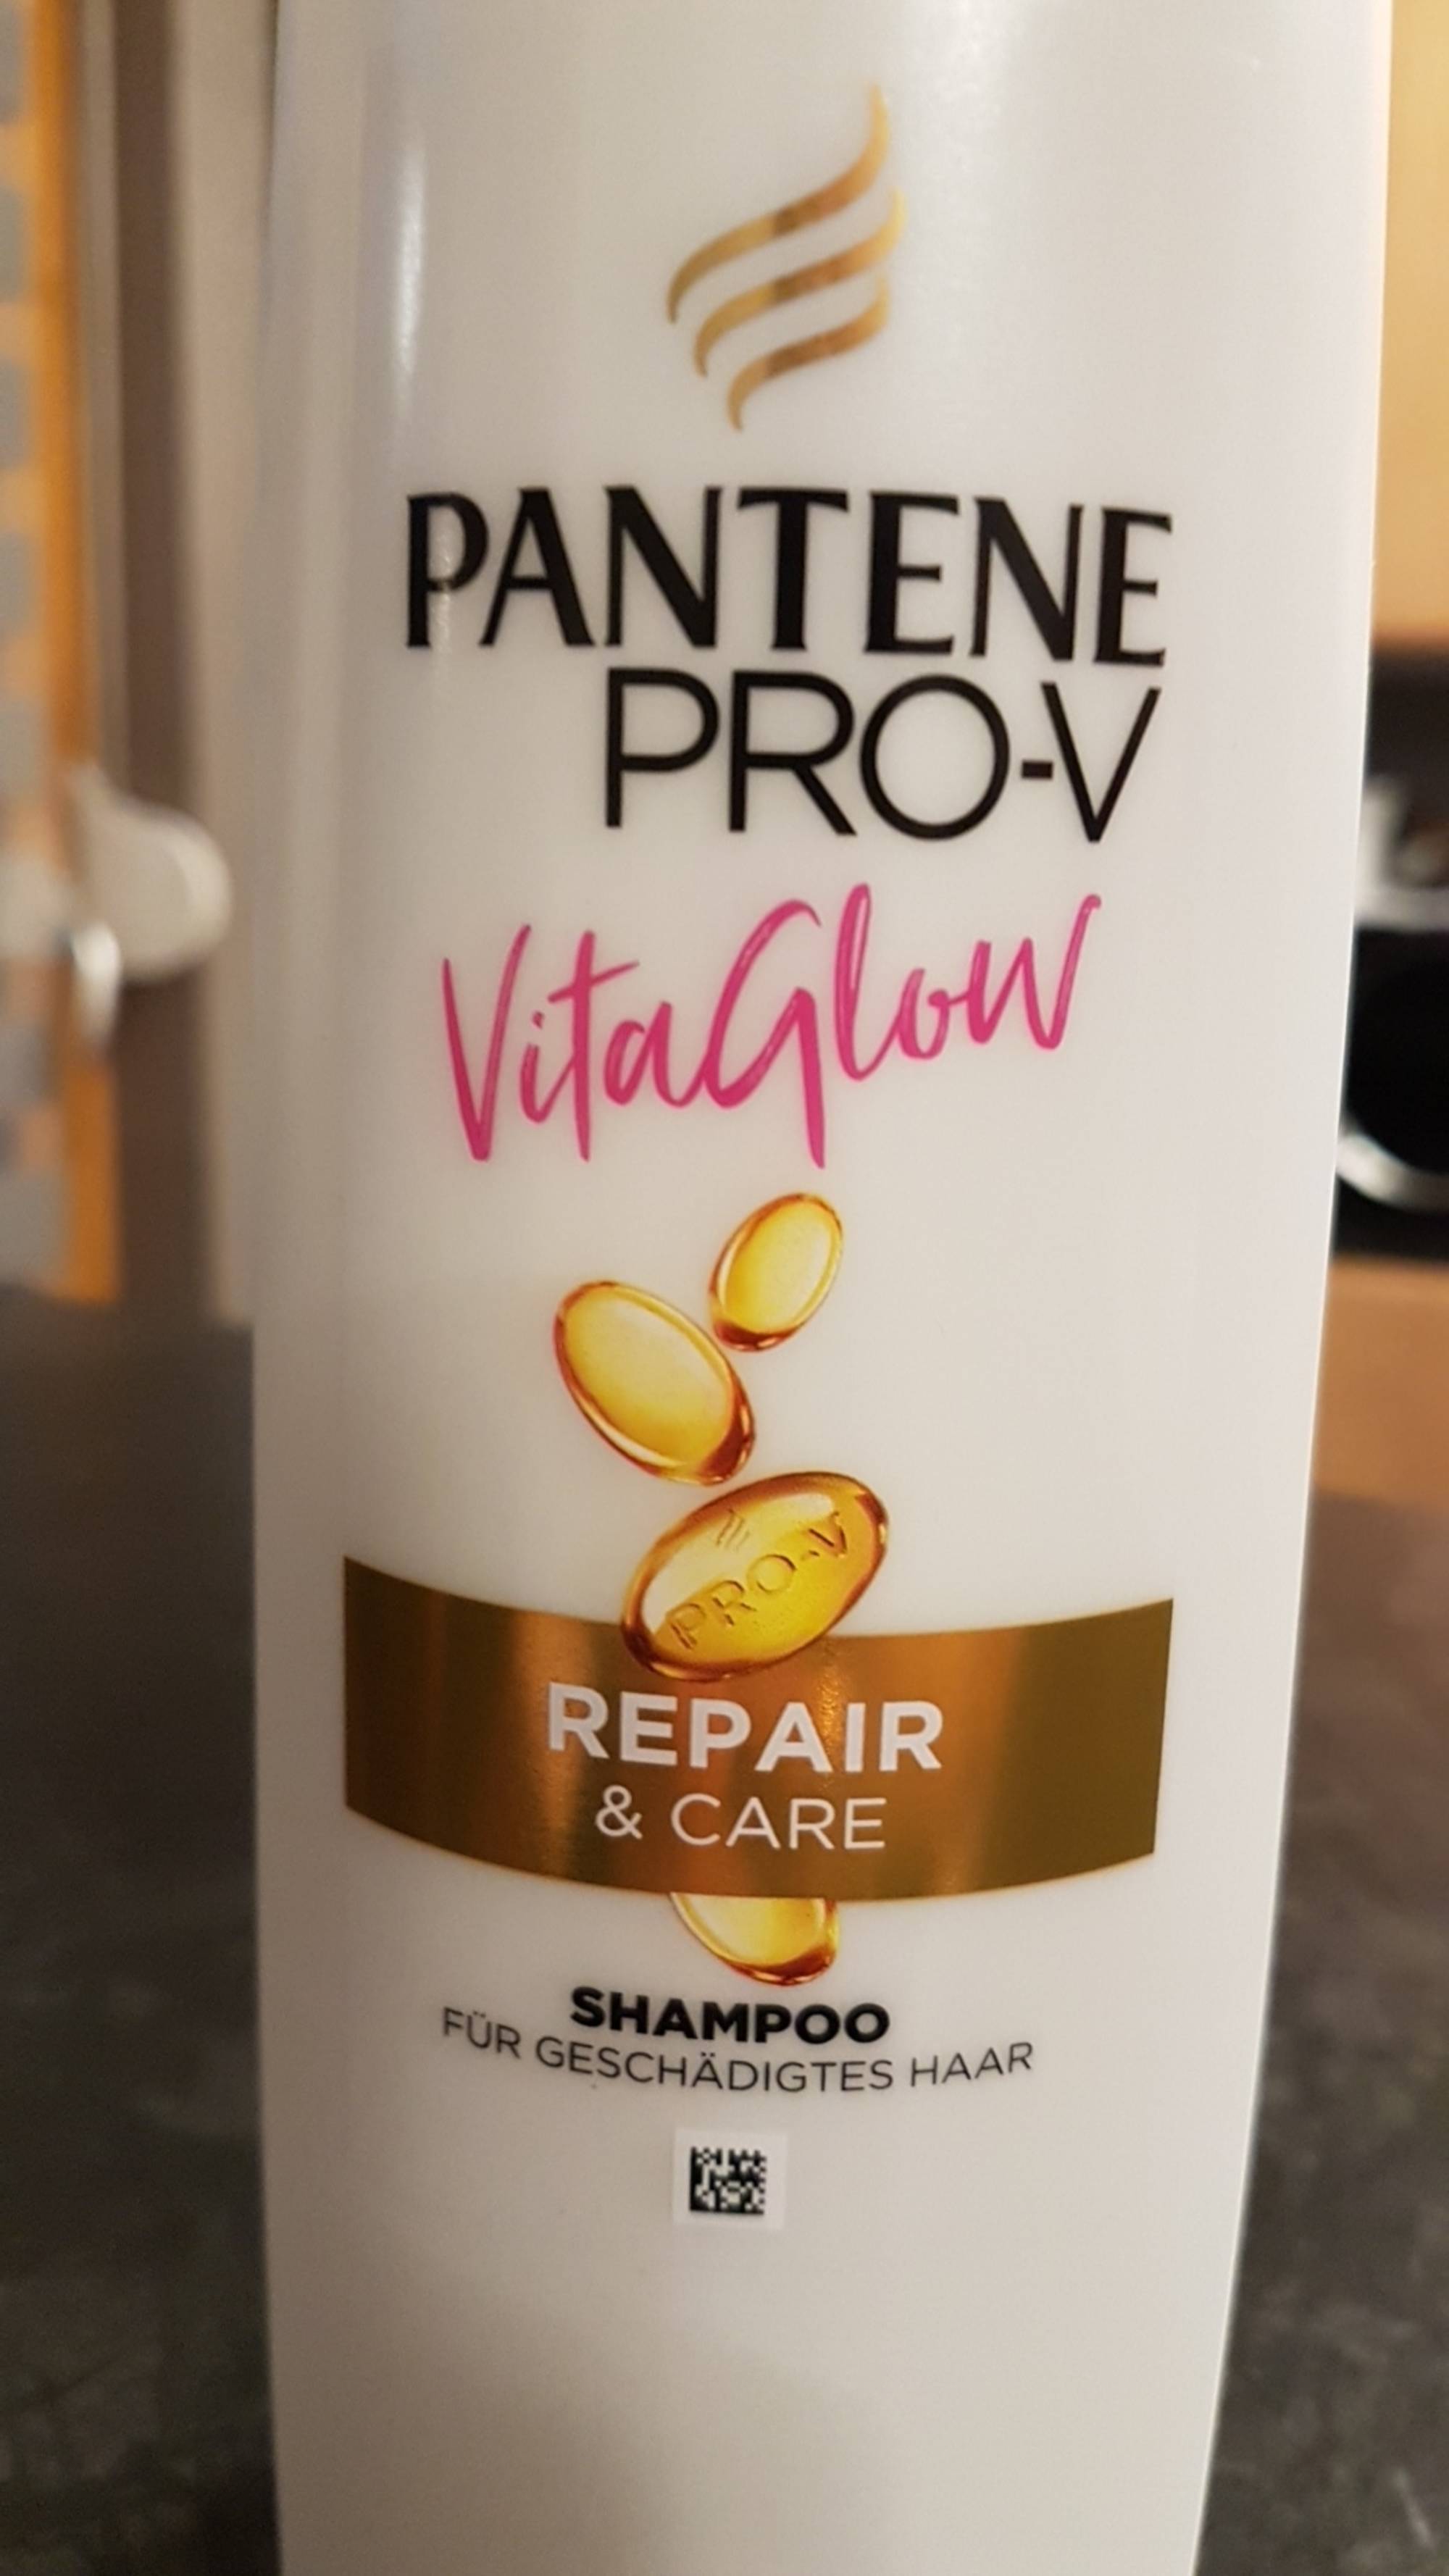 PANTENE PRO-V - Vita glow repair & care - Shampoo